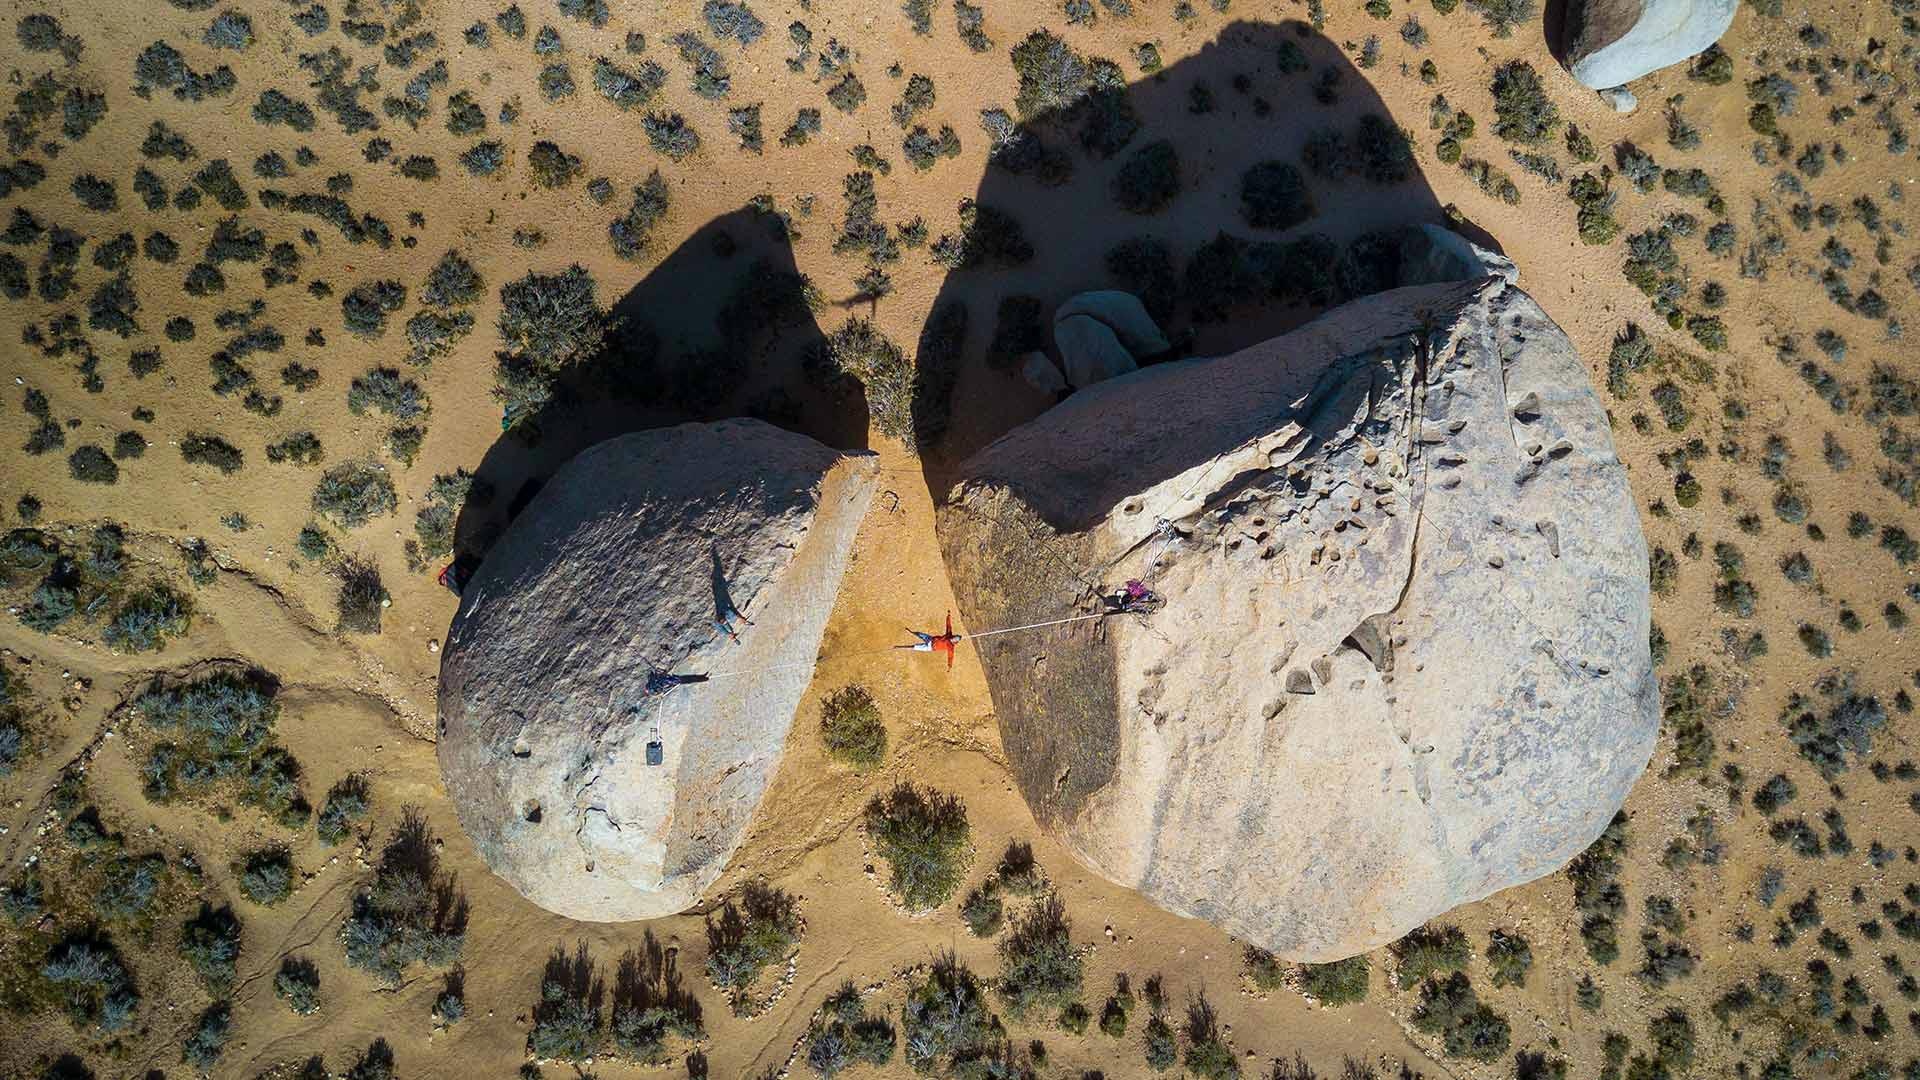 Slacklining: Highlining between the two giant rocks, Bishop, California. 1920x1080 Full HD Background.